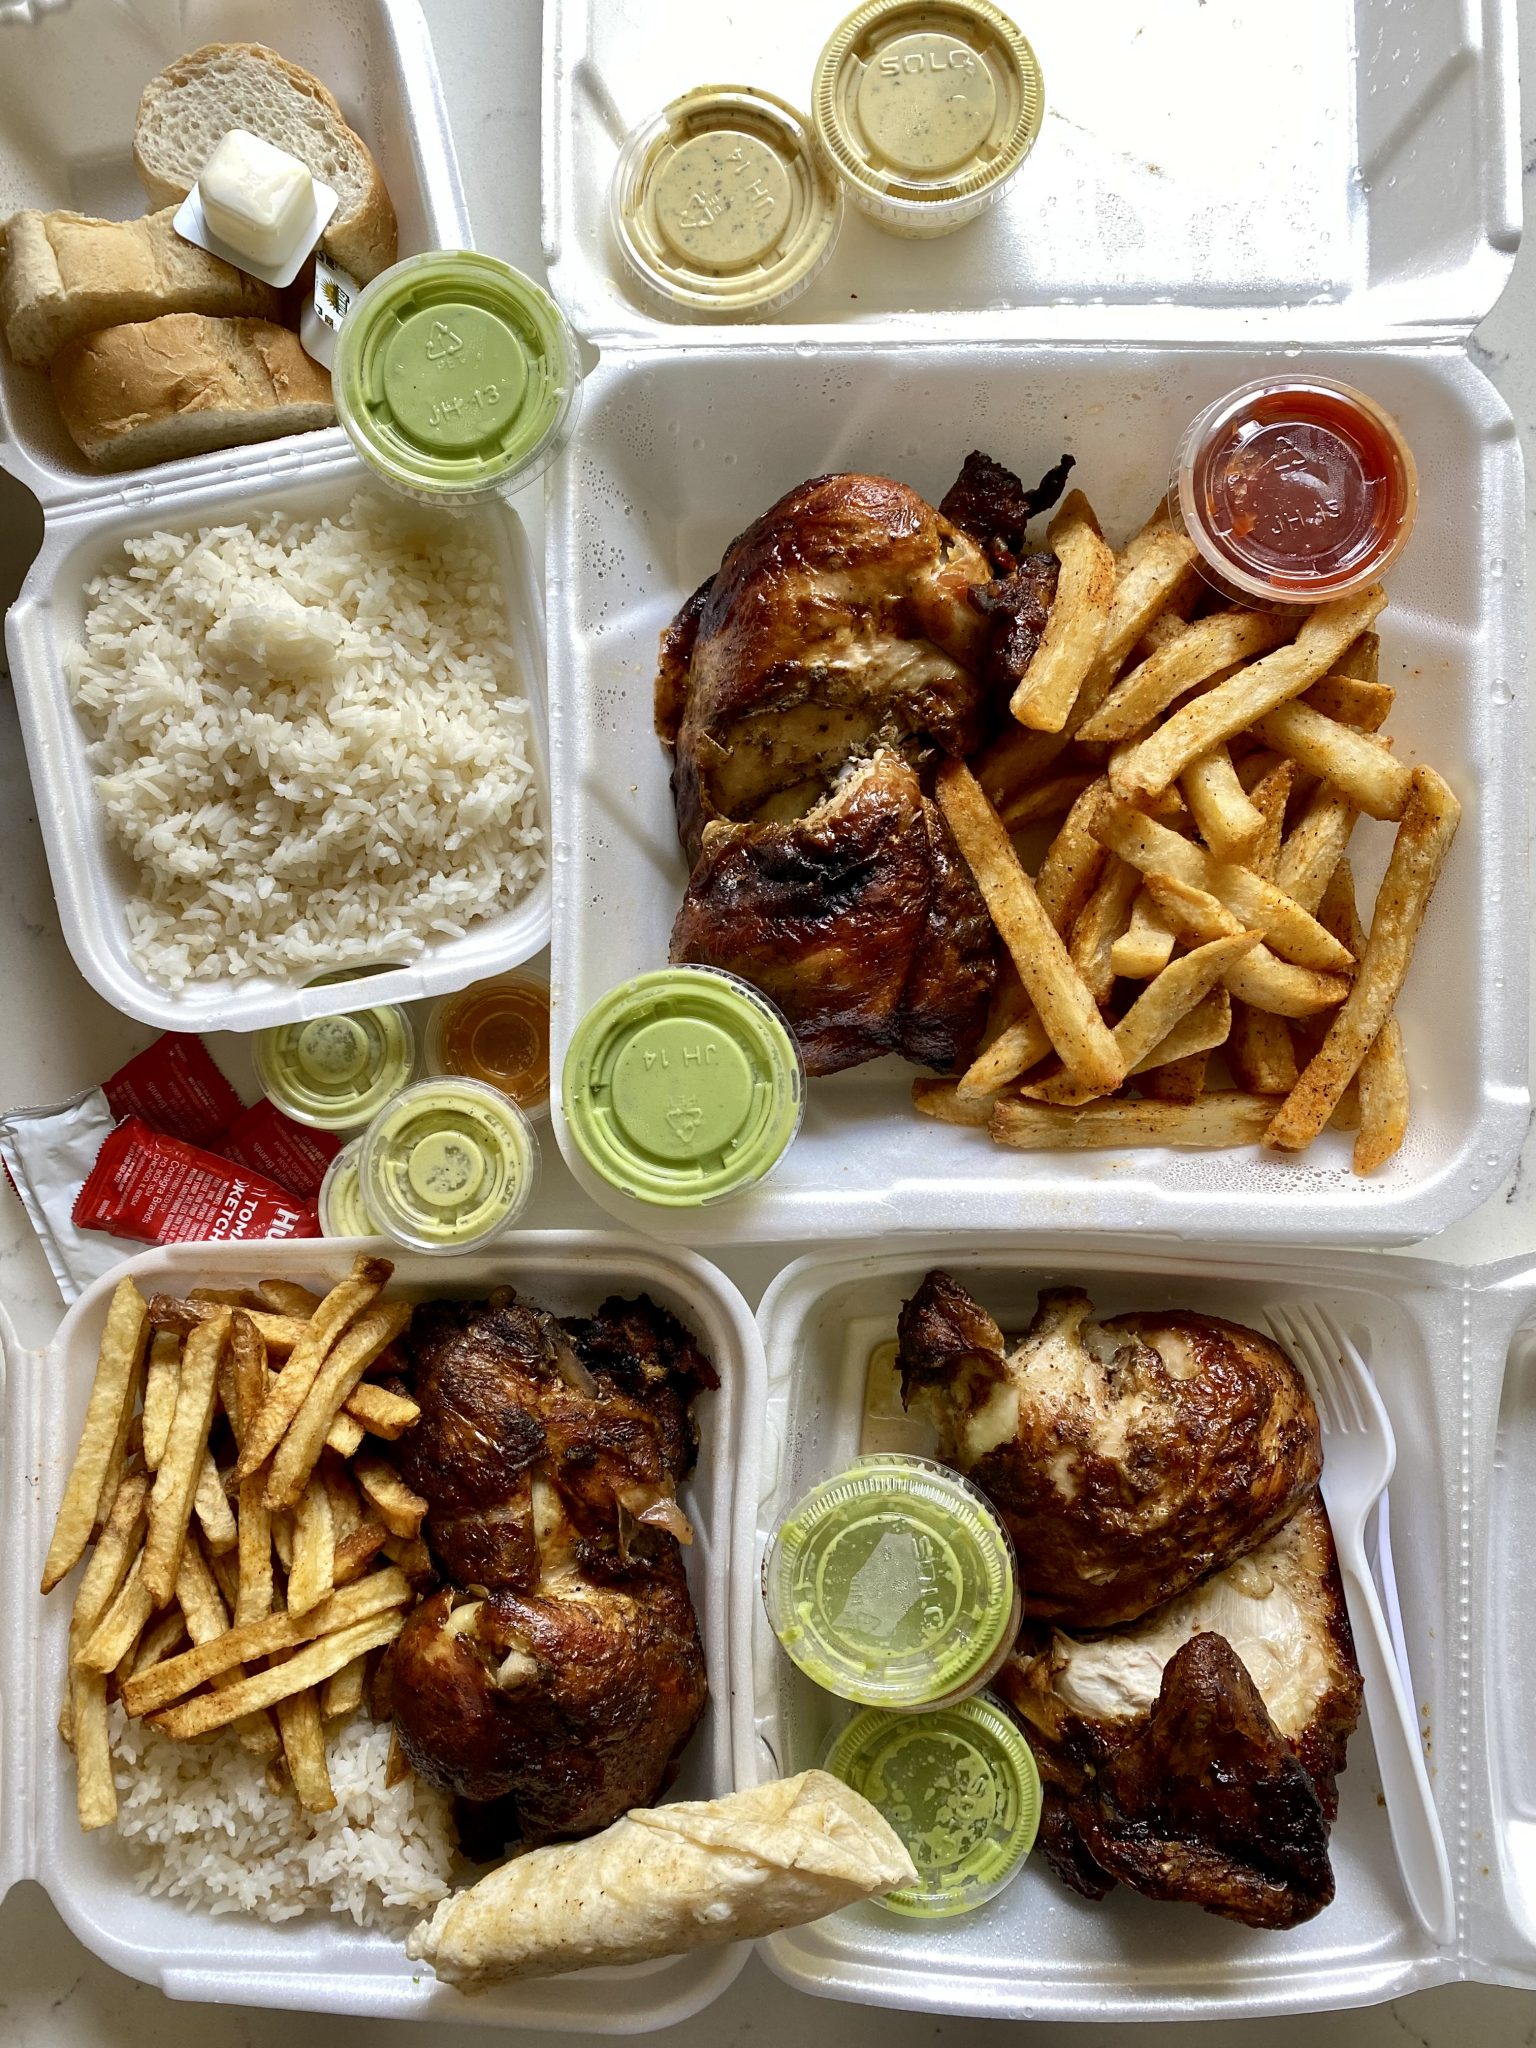 aji verdes from restaurants: pollo a la brasa, cavaman kitchen, pollos al brasero